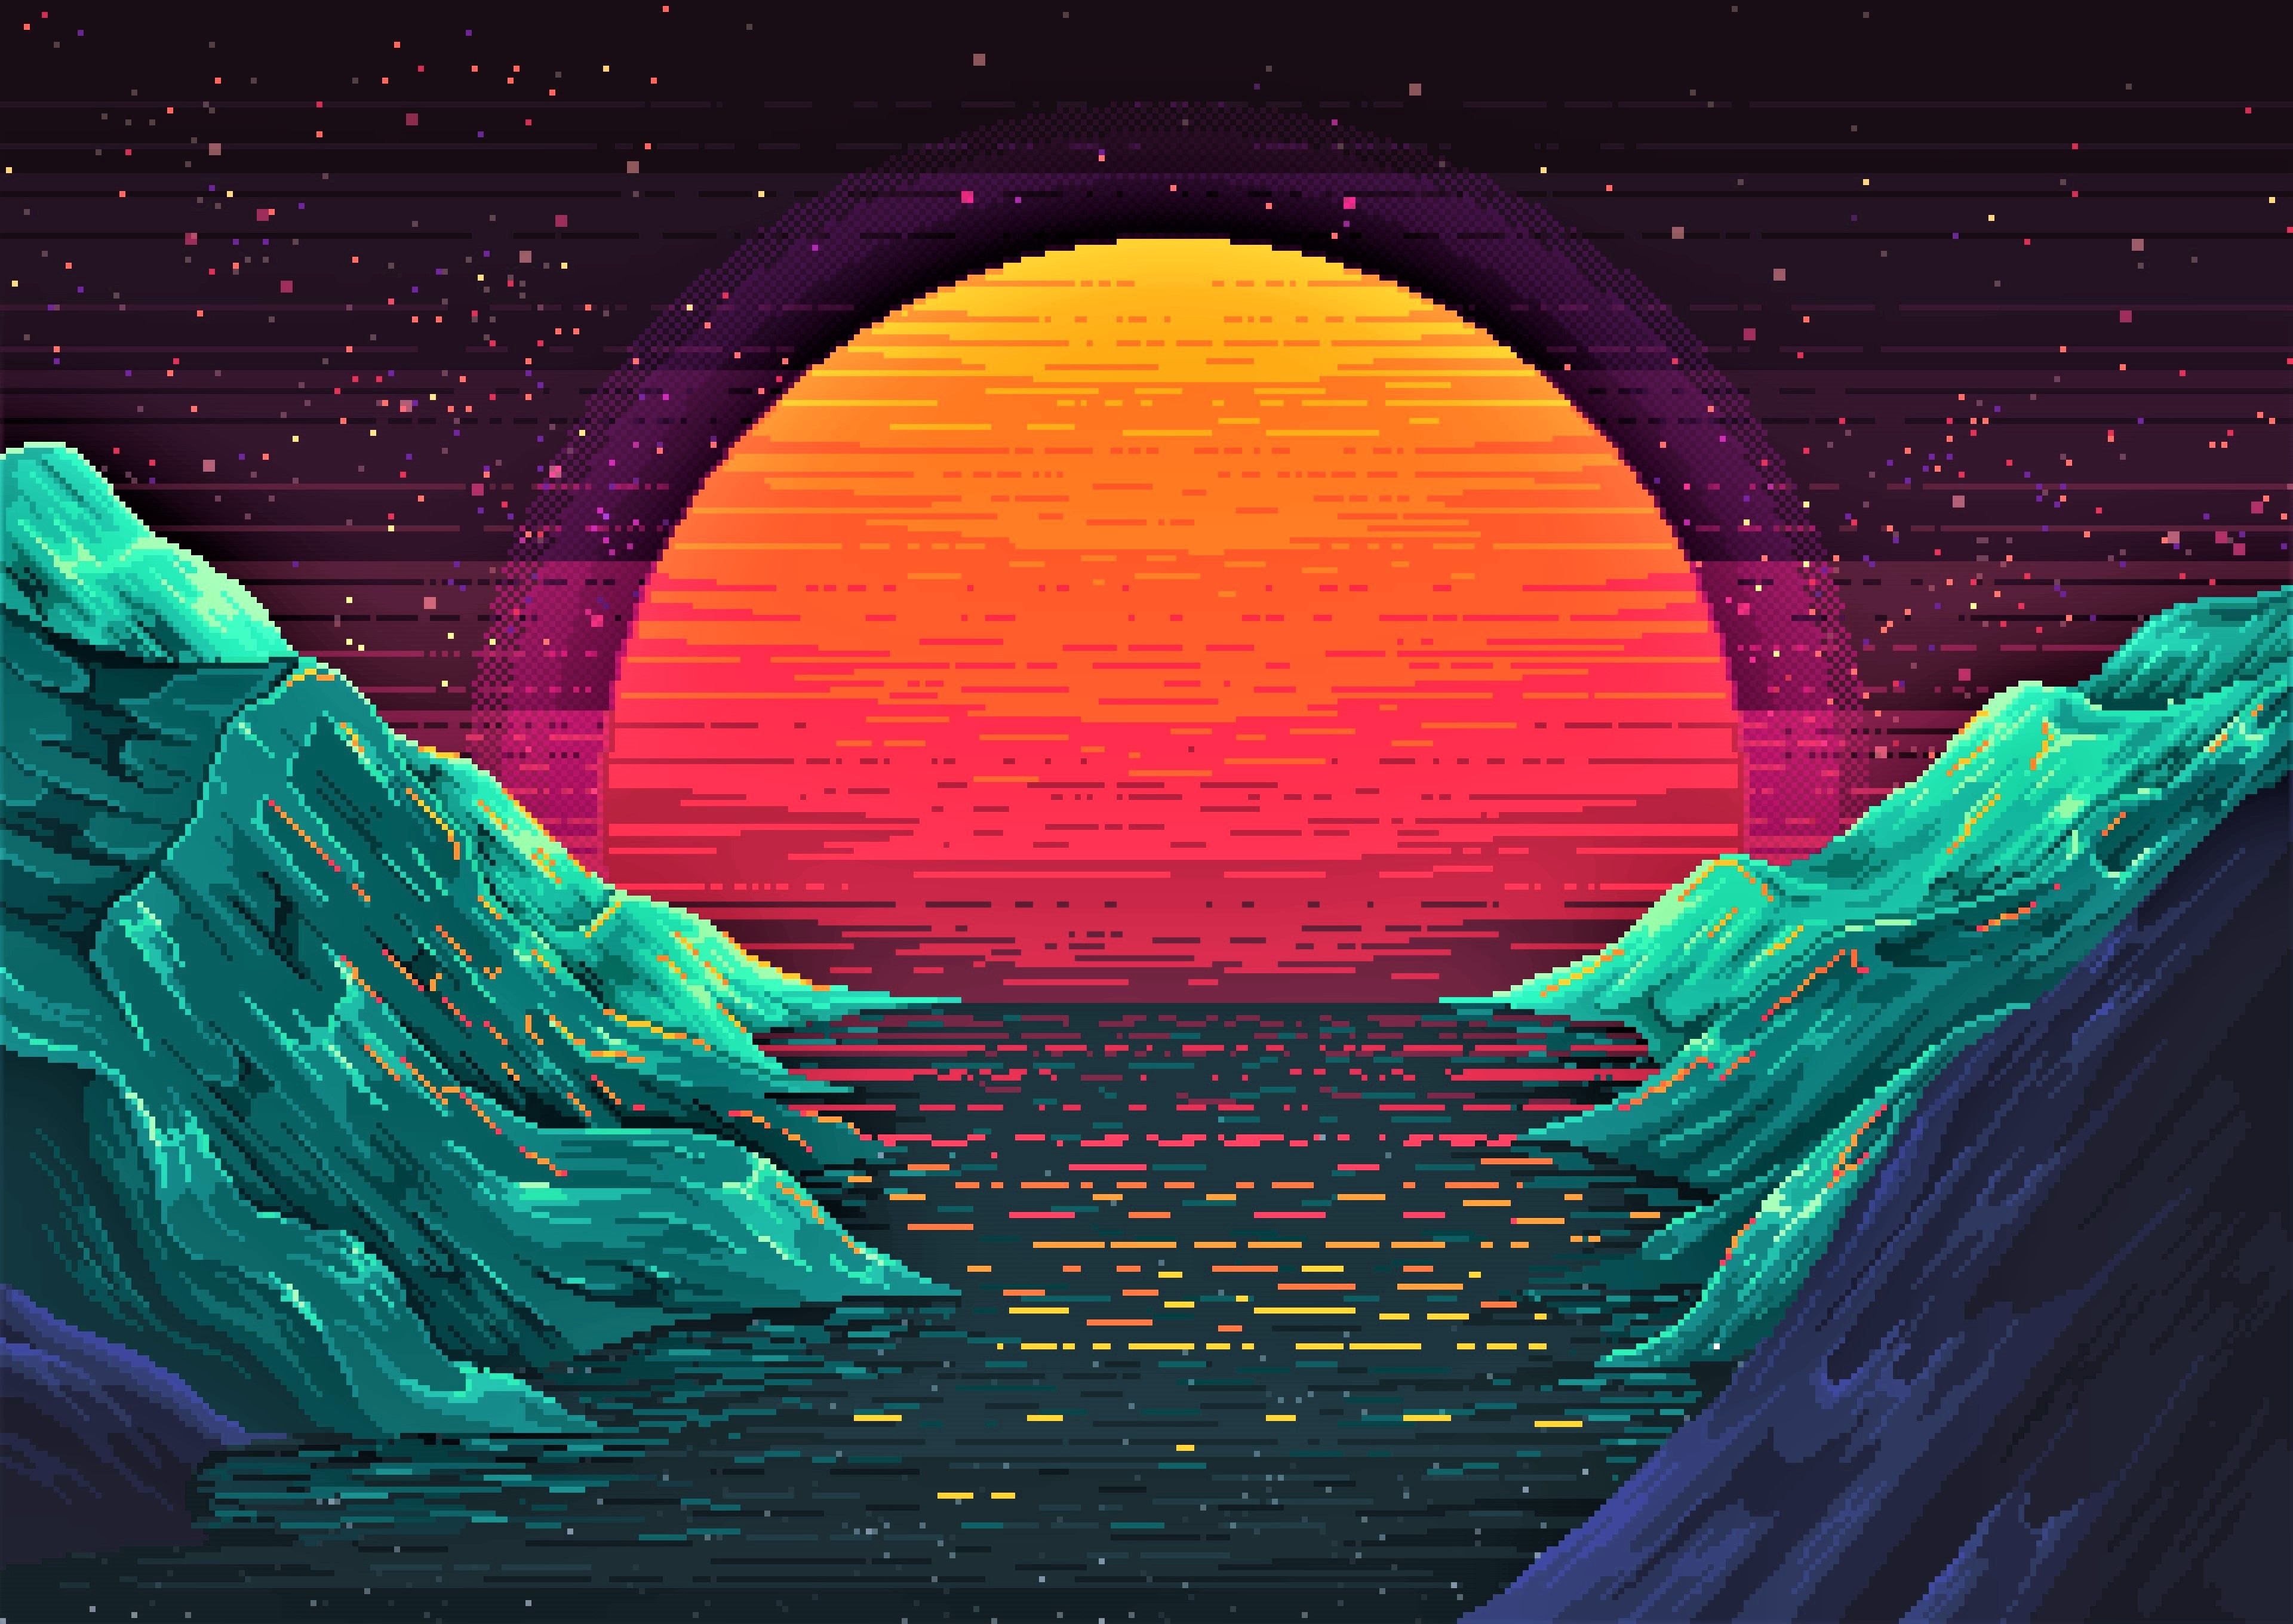 Sun, Artistic, Ocean, Retro Wave, Landscape, Pixel Art